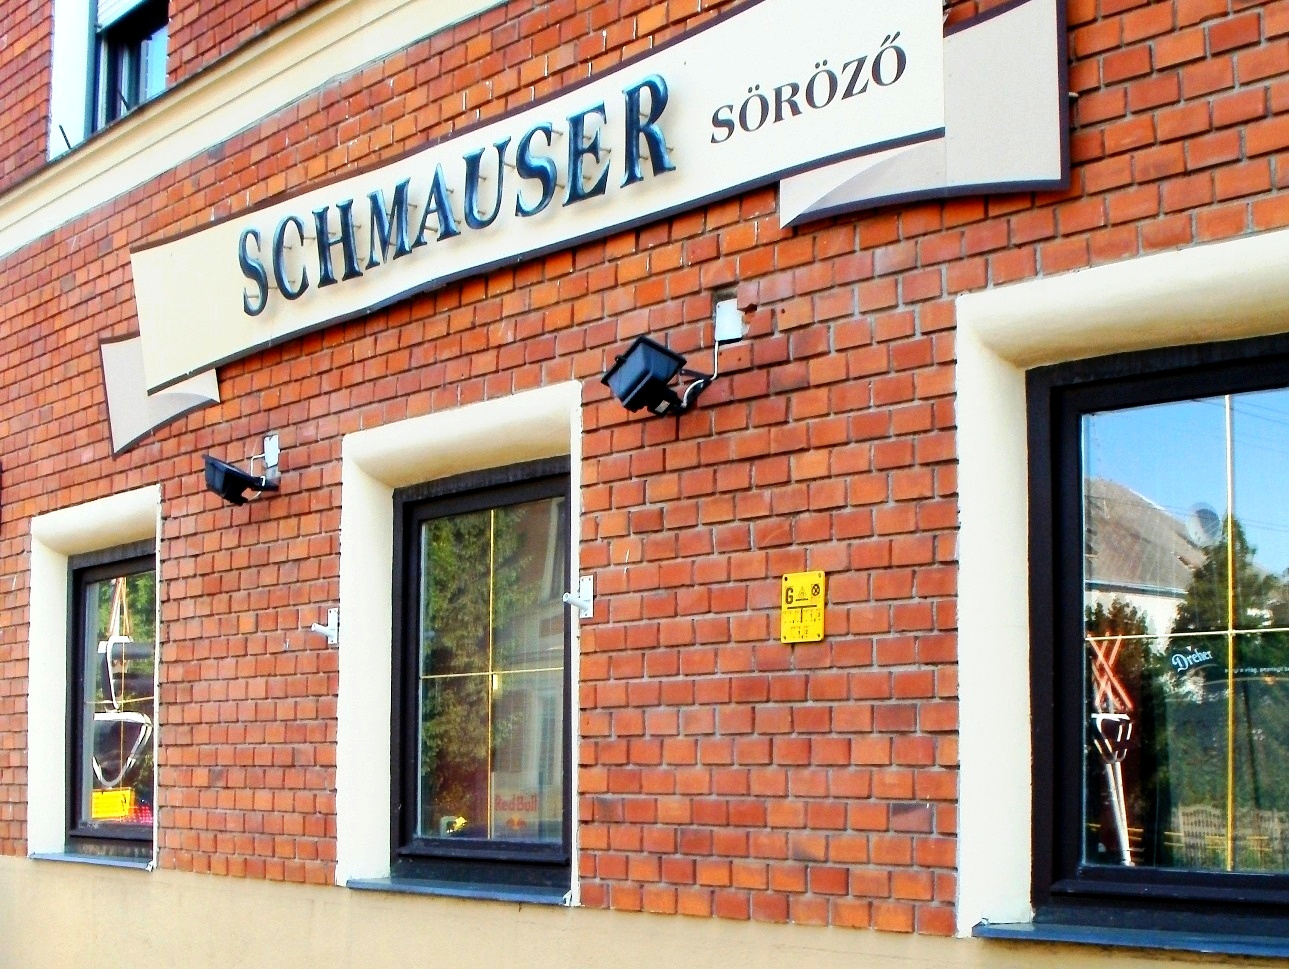 Schmauser vendéglő